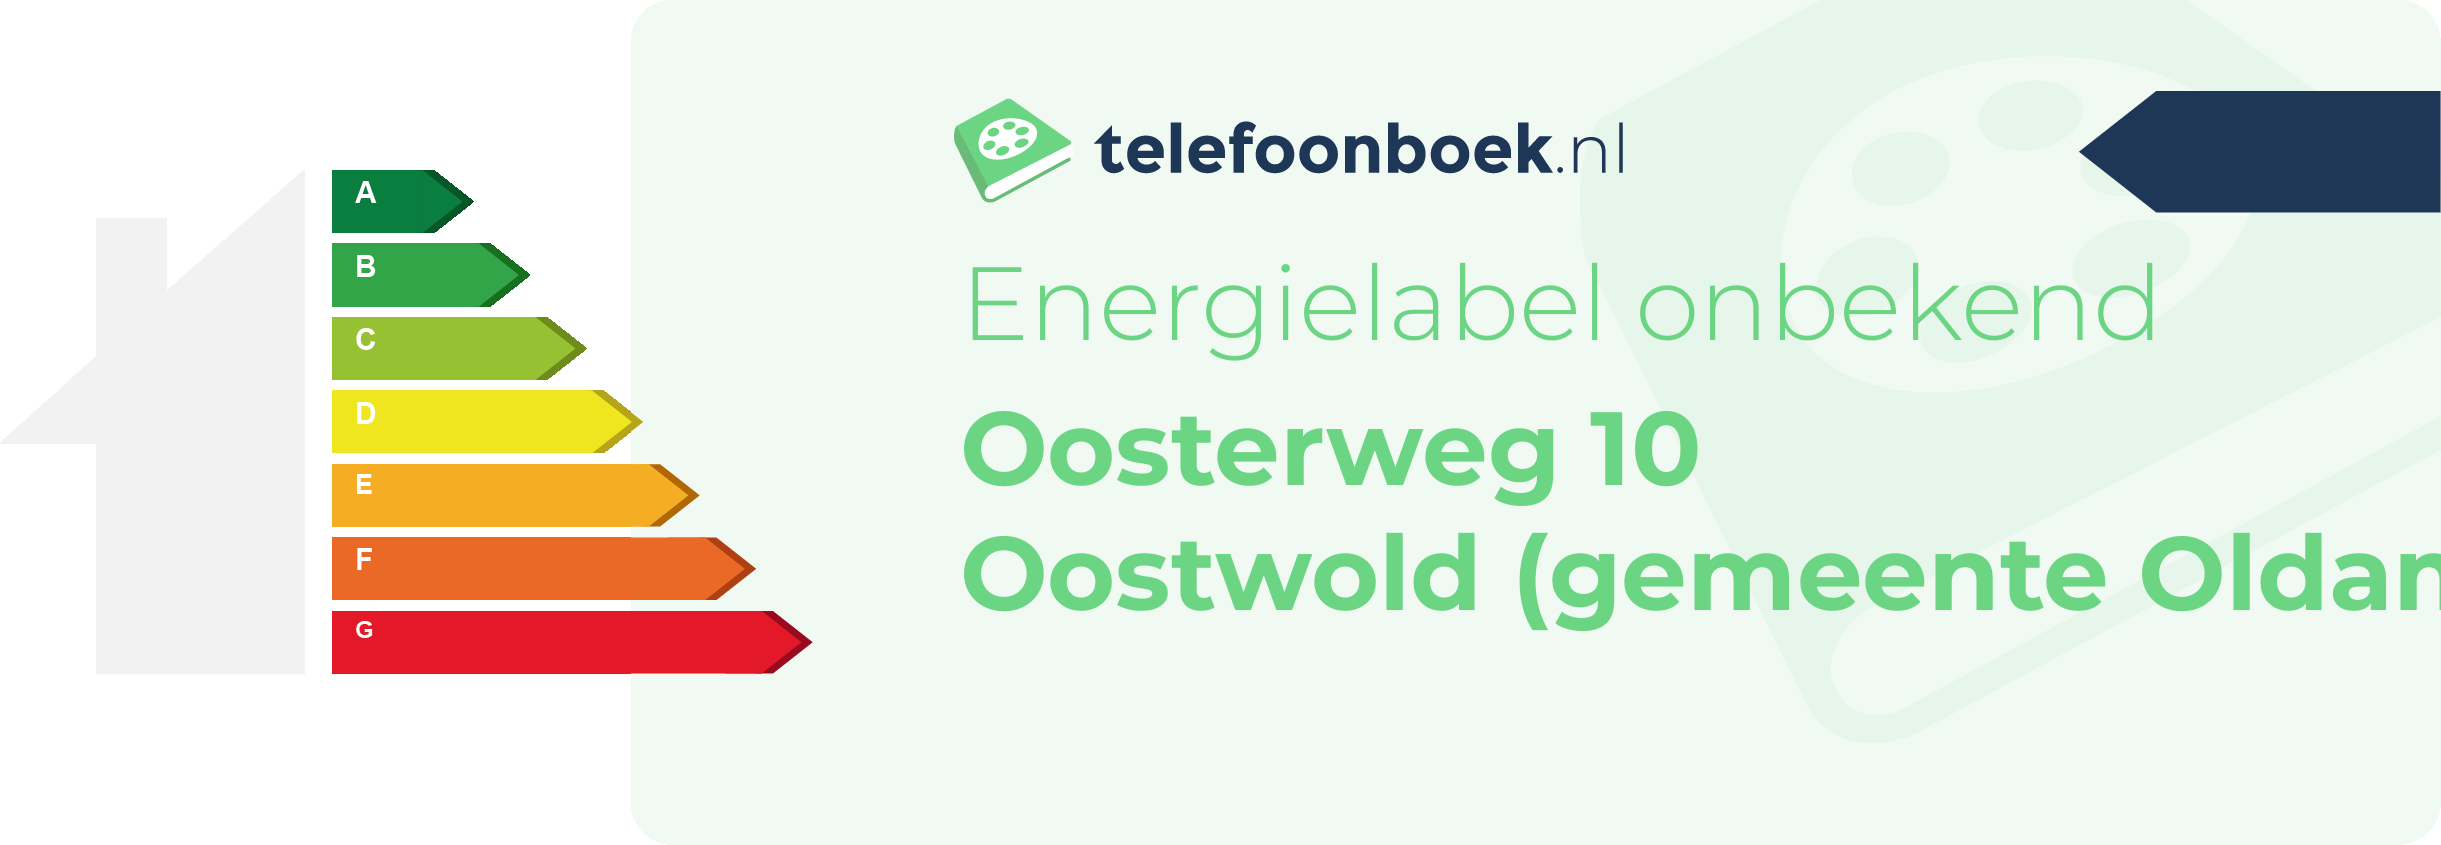 Energielabel Oosterweg 10 Oostwold (gemeente Oldambt Groningen)